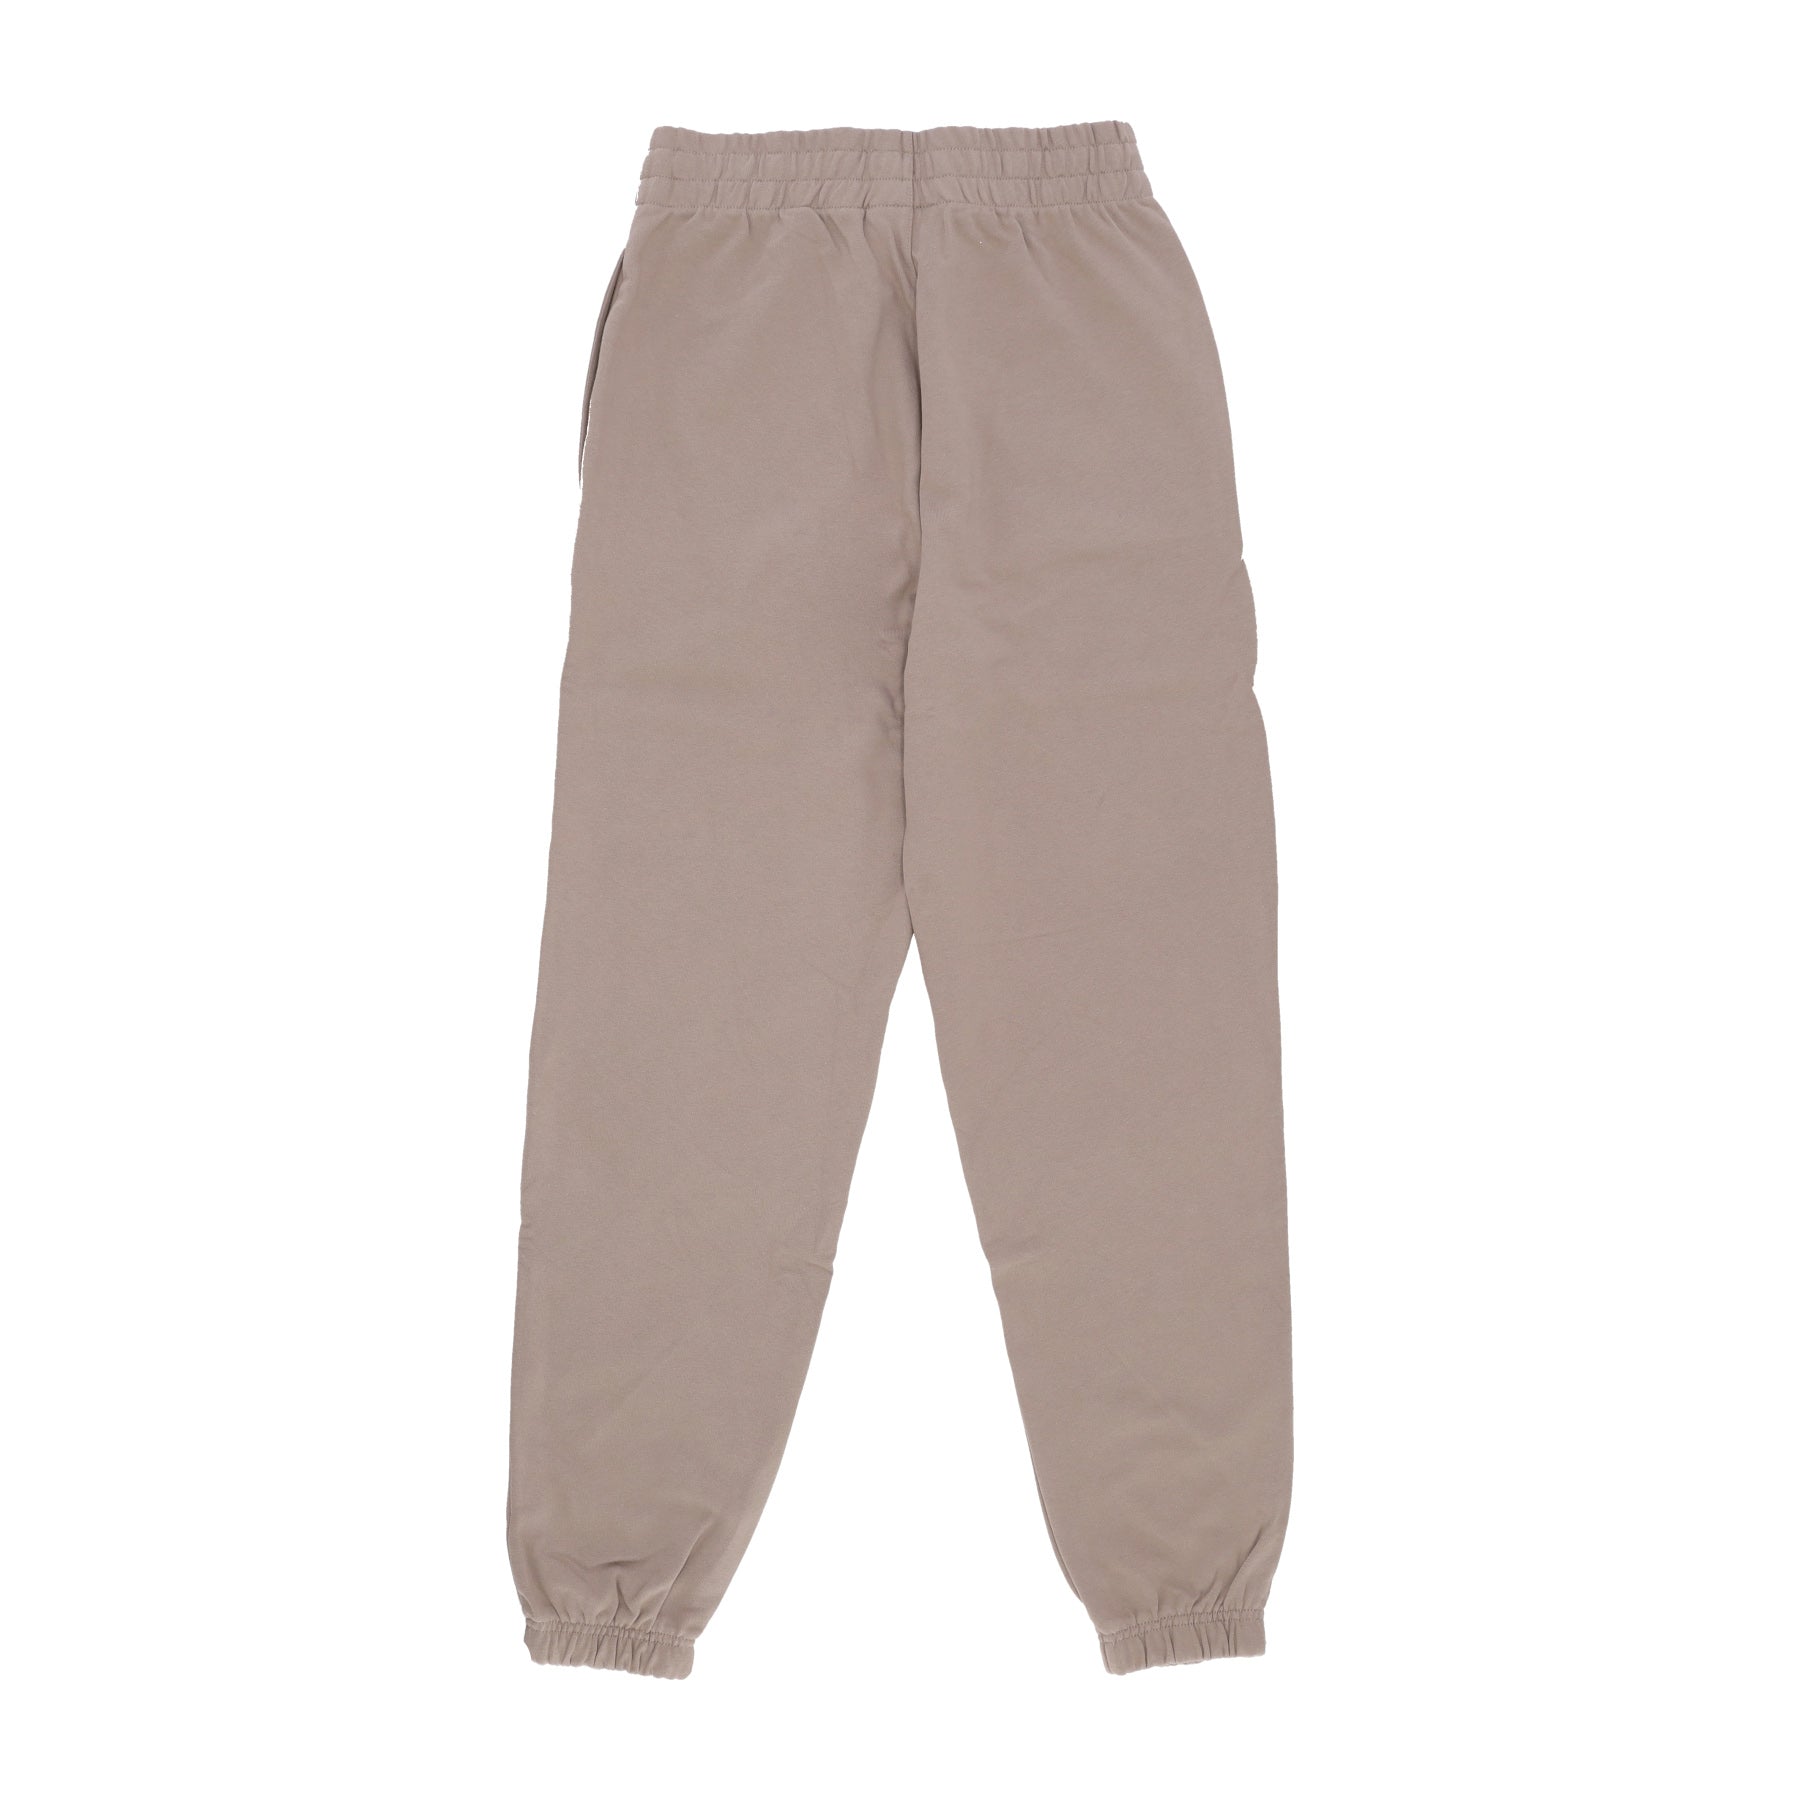 Pantalone Tuta Felpato Uomo Mlb League Essentials Jogger Neyyan Air Grey/off White 60435550